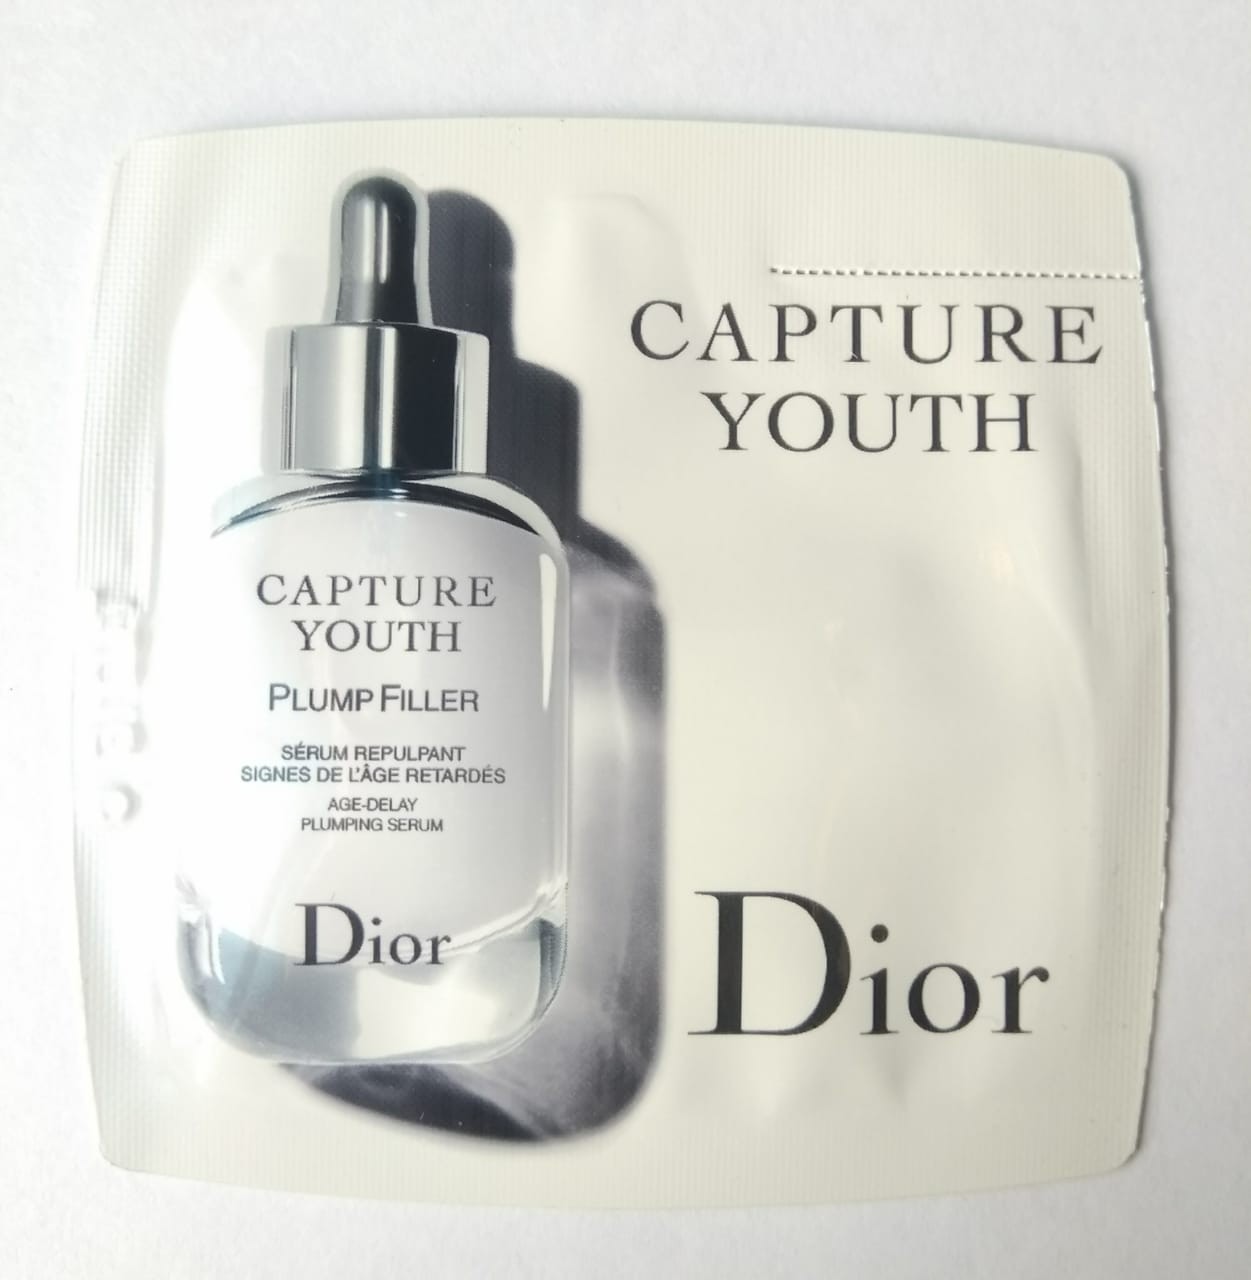 dior capture youth plump filler